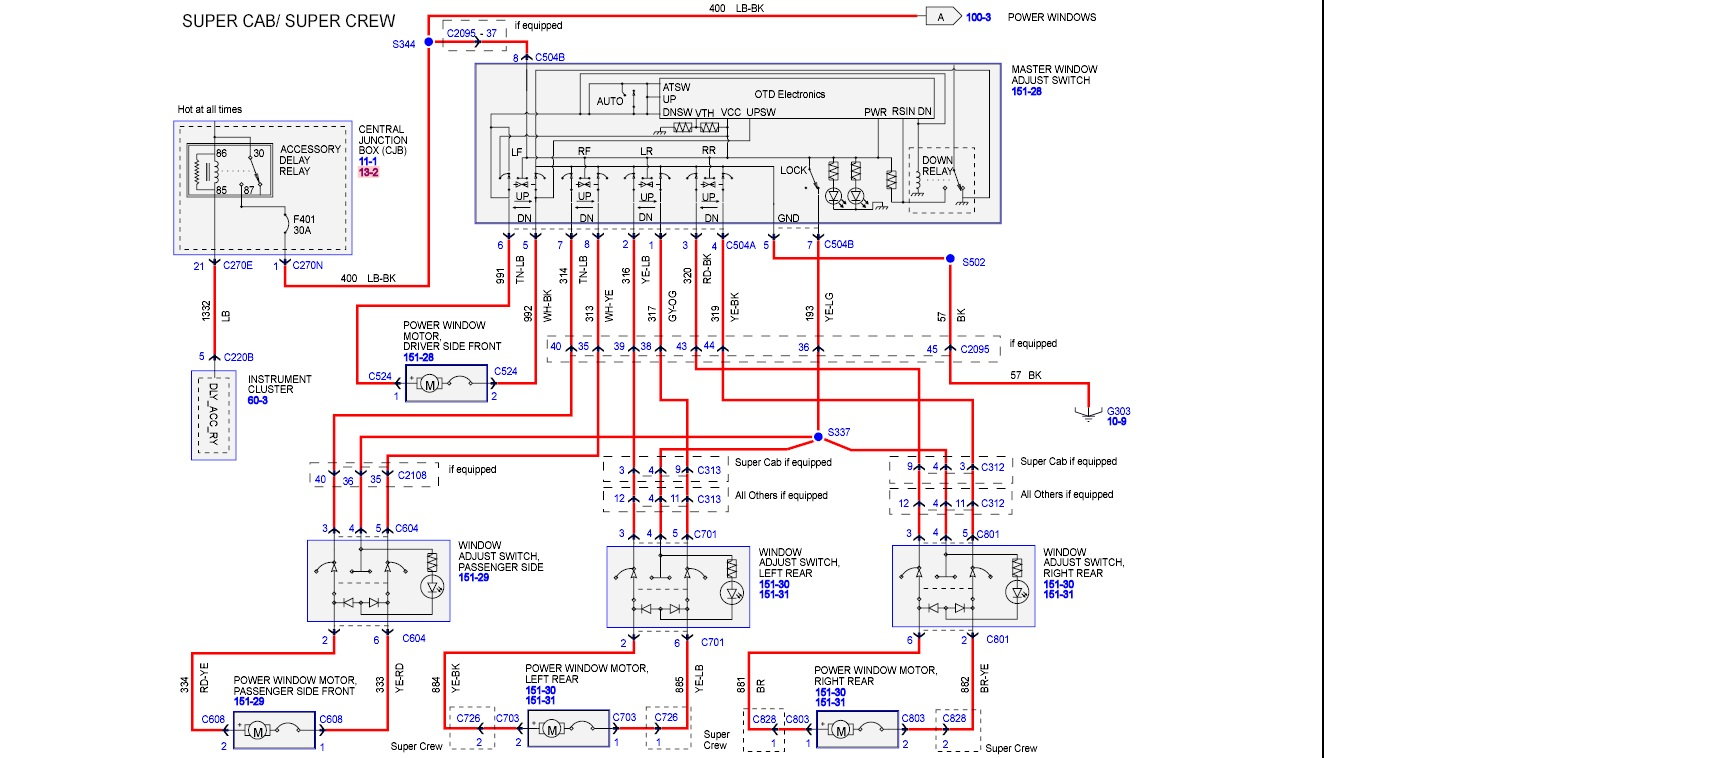 Wiring Diagram Ford F150 from cimg8.ibsrv.net